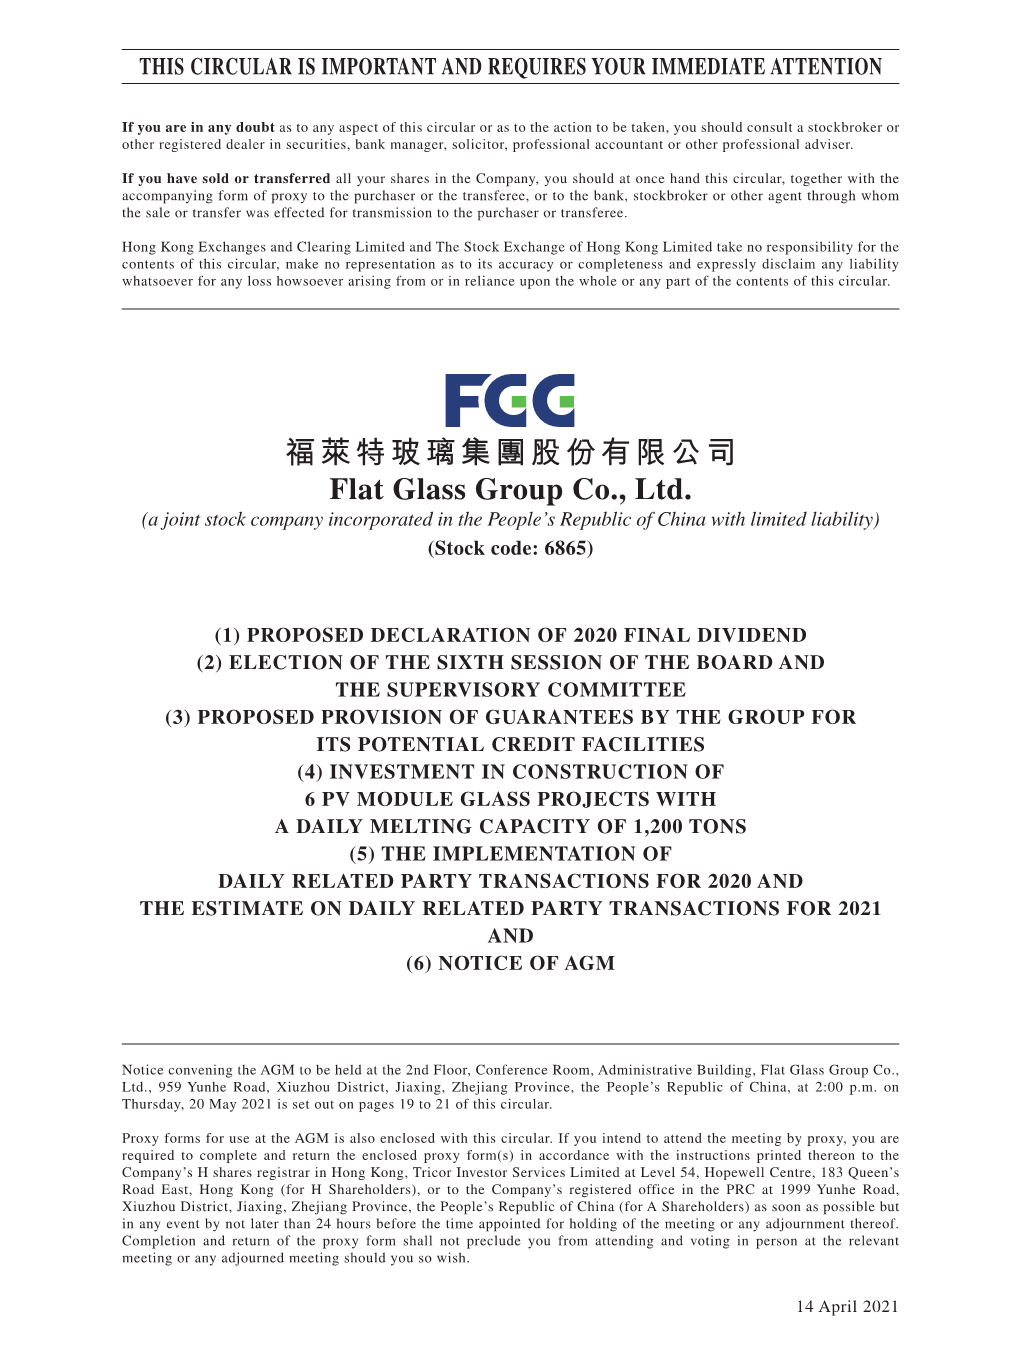 福萊特玻璃集團股份有限公司 Flat Glass Group Co., Ltd. (A Joint Stock Company Incorporated in the People’S Republic of China with Limited Liability) (Stock Code: 6865)